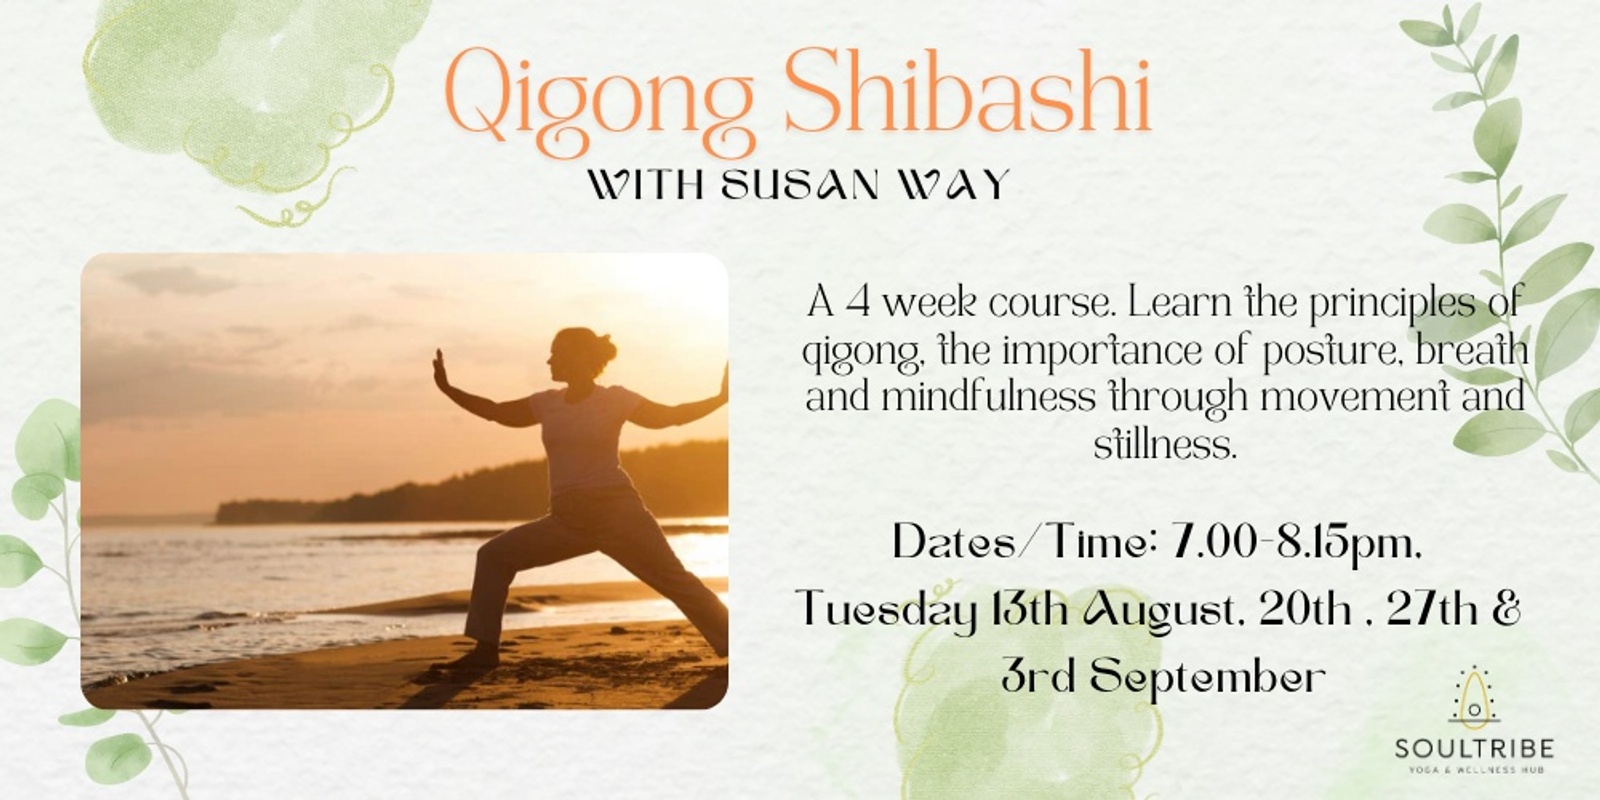 Banner image for Qigong Shibashi with Susan Way - 4 Week Course